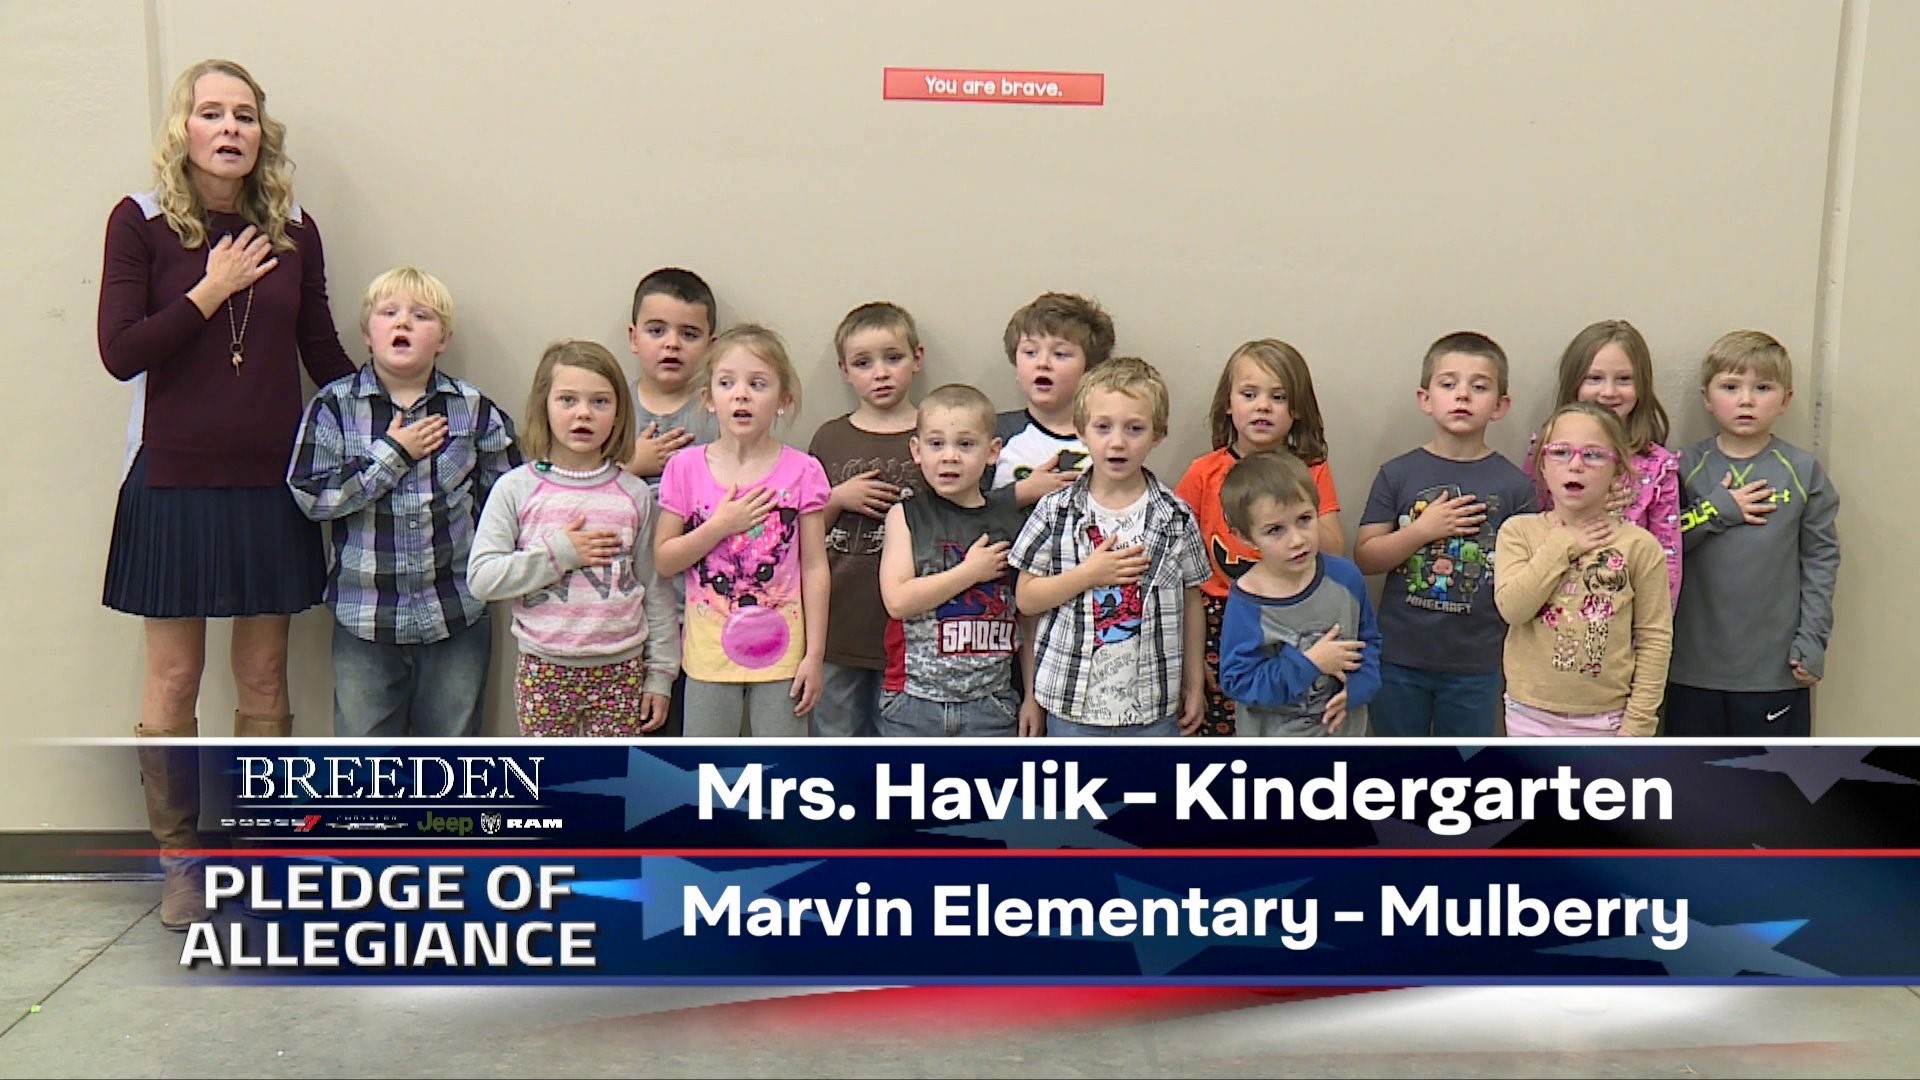 Mrs. Havlik Kindergarten Marvin Elementary, Mulberry